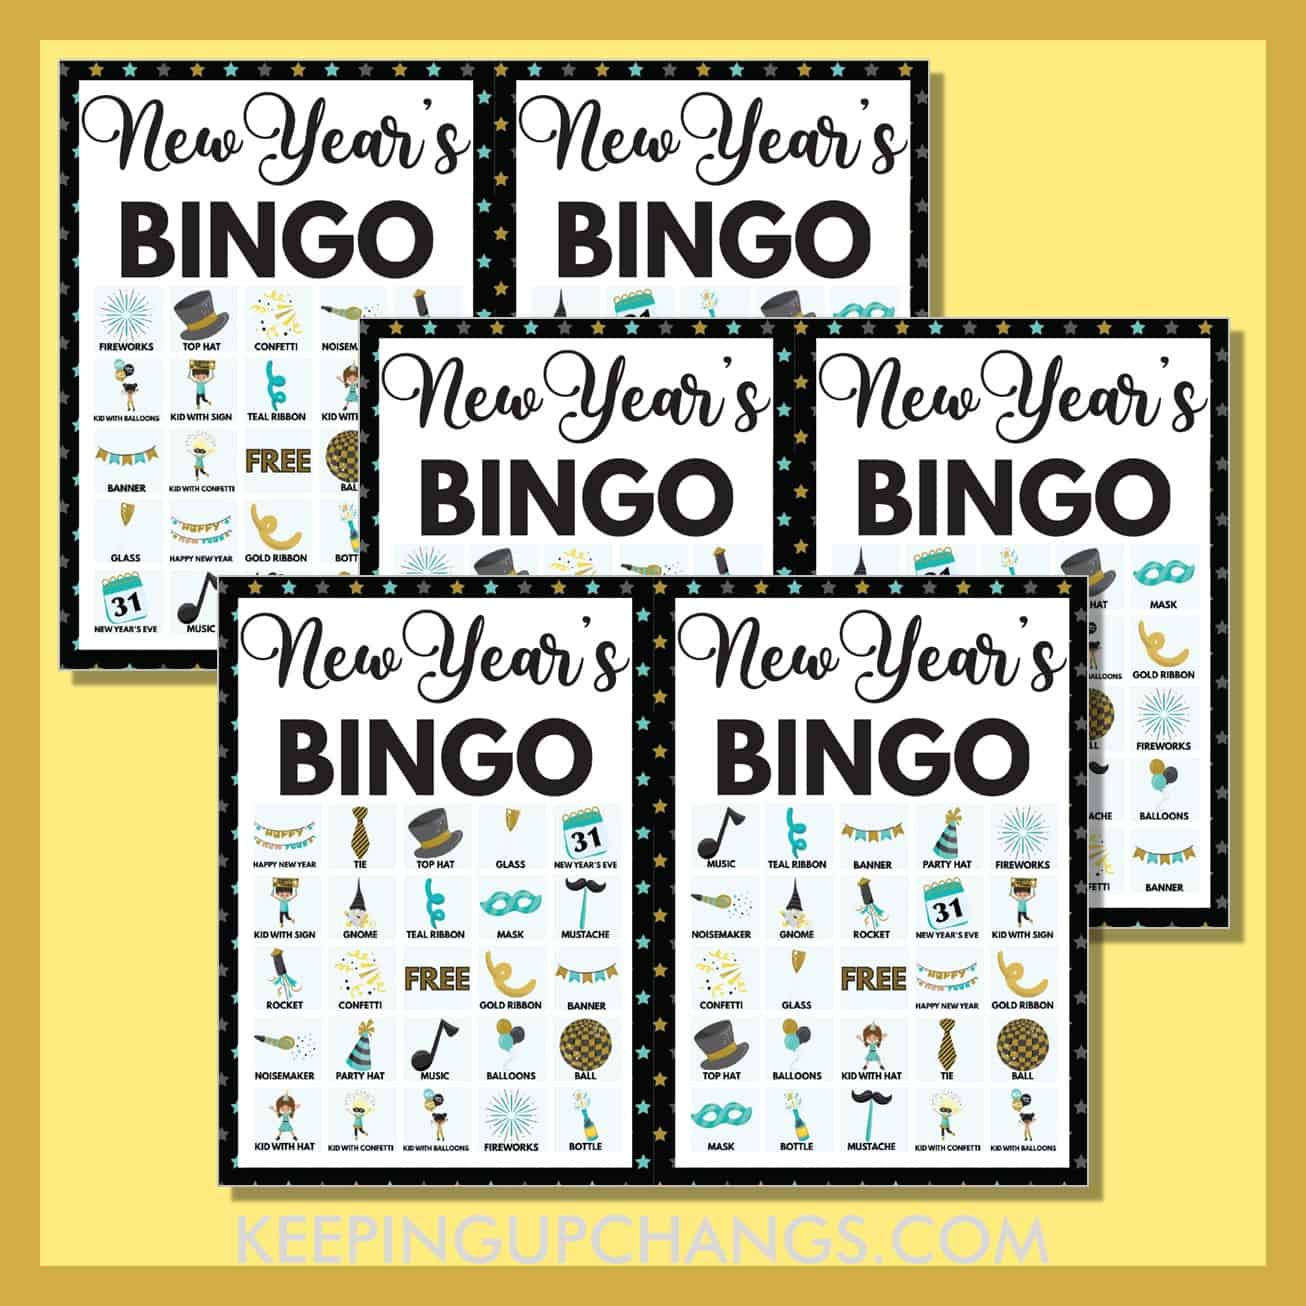 free new year's bingo 5x5 game cards.